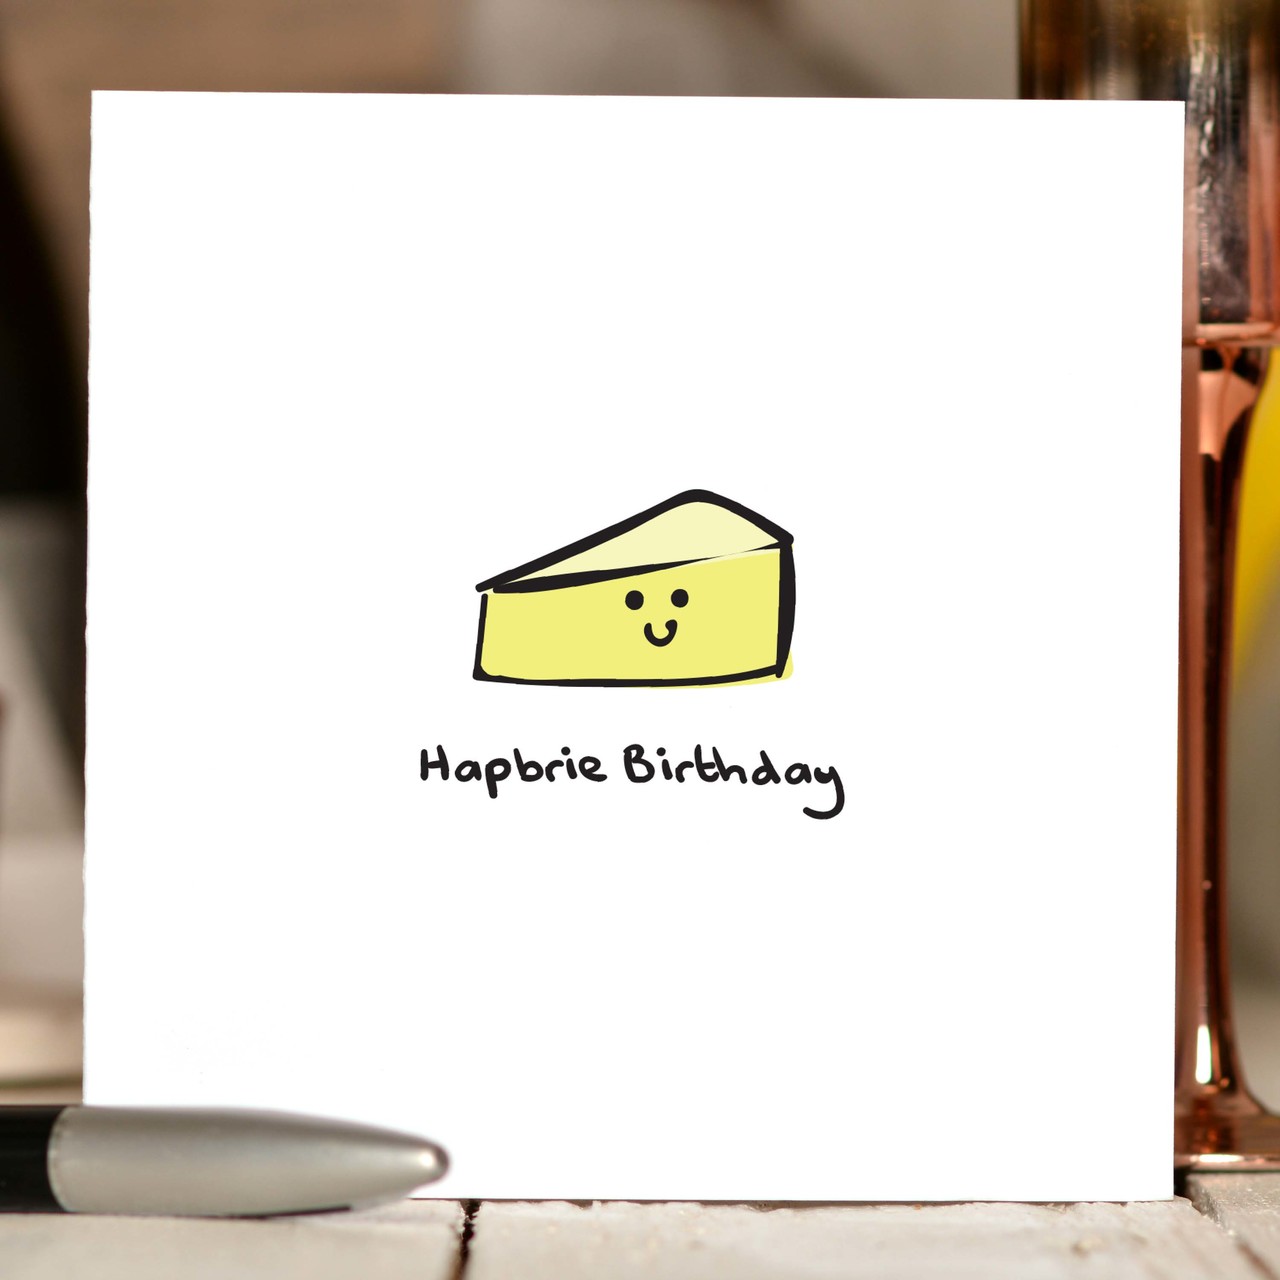 Hapbrie Birthday Card